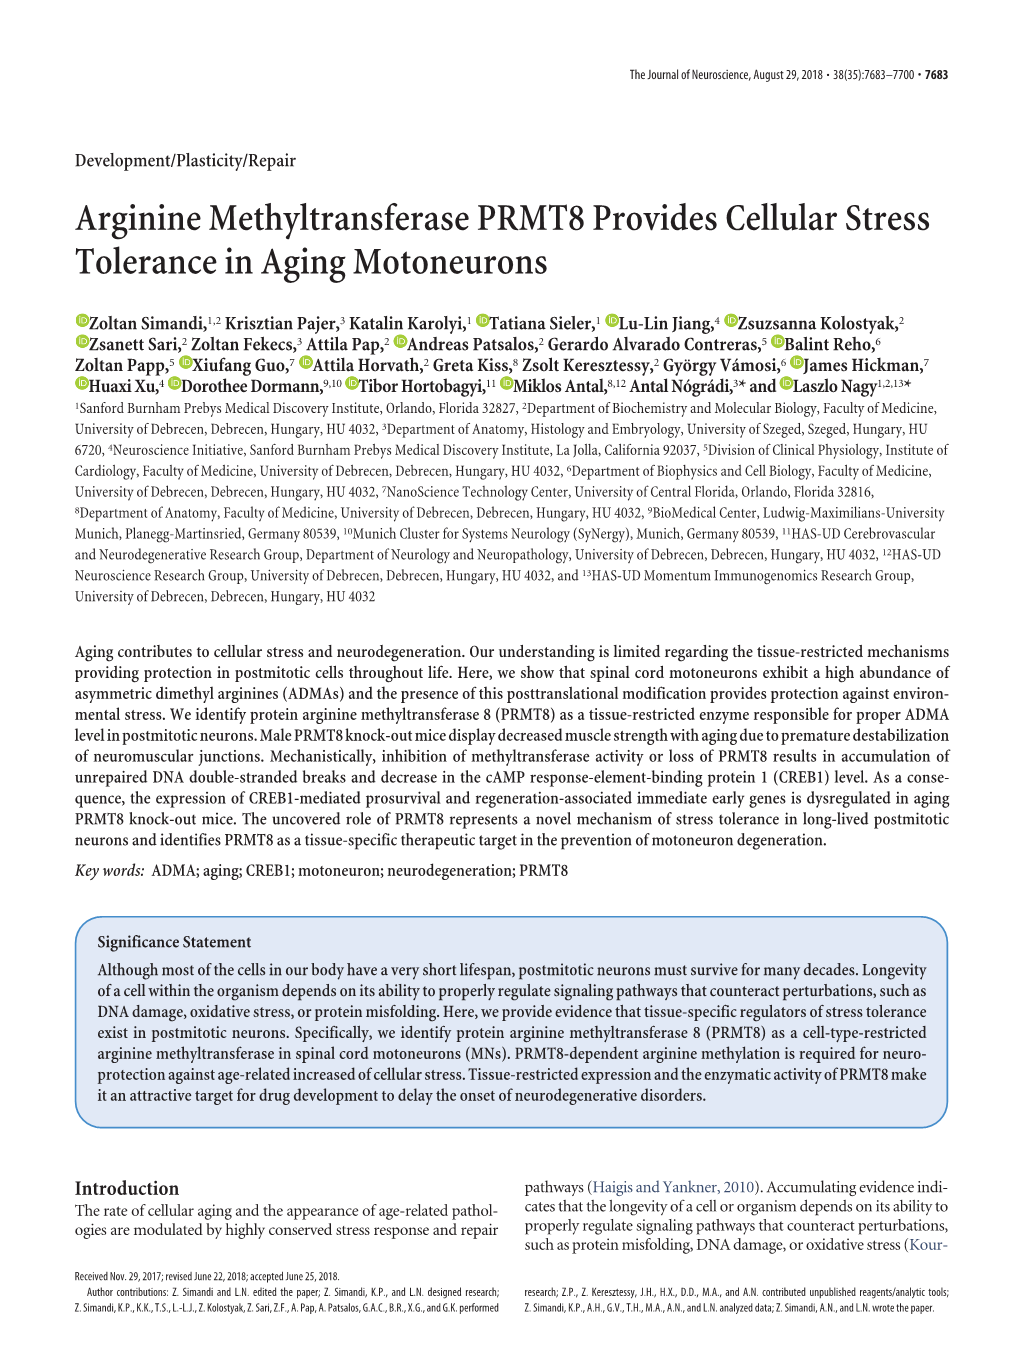 Arginine Methyltransferase PRMT8 Provides Cellular Stress Tolerance in Aging Motoneurons